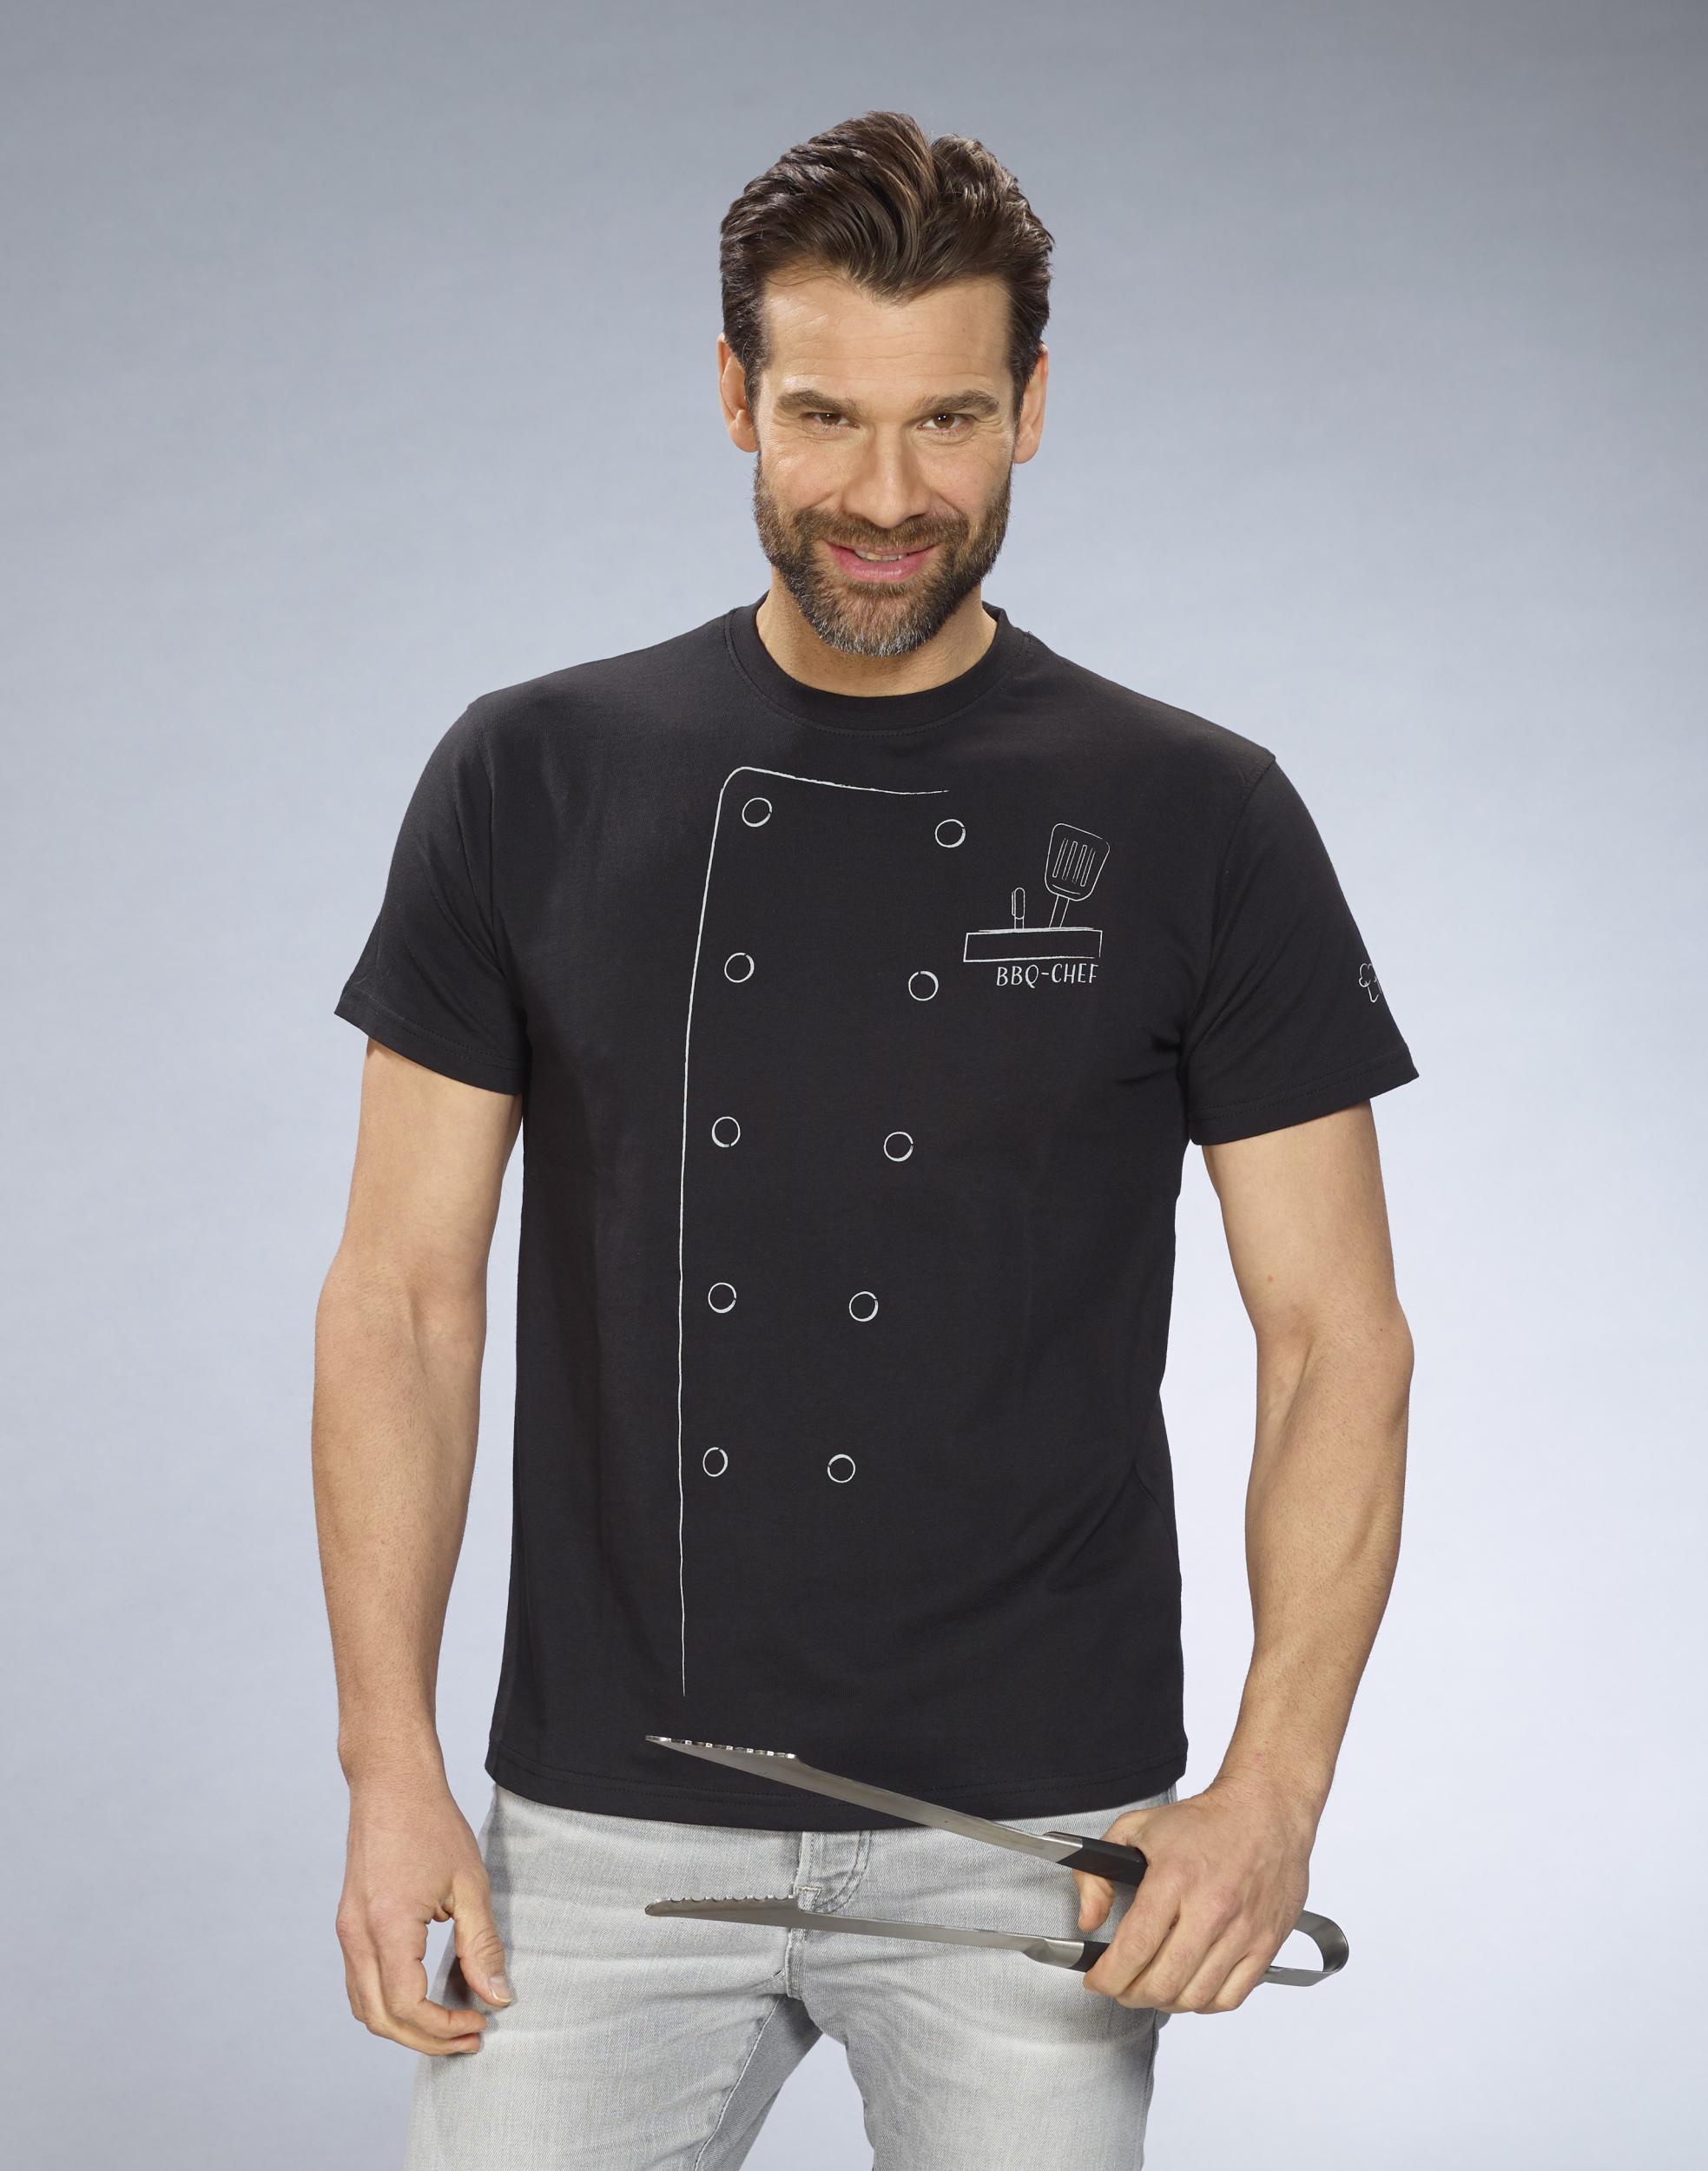 T-Shirt Grillmeister, Farbe schwarz, Gr.2XL